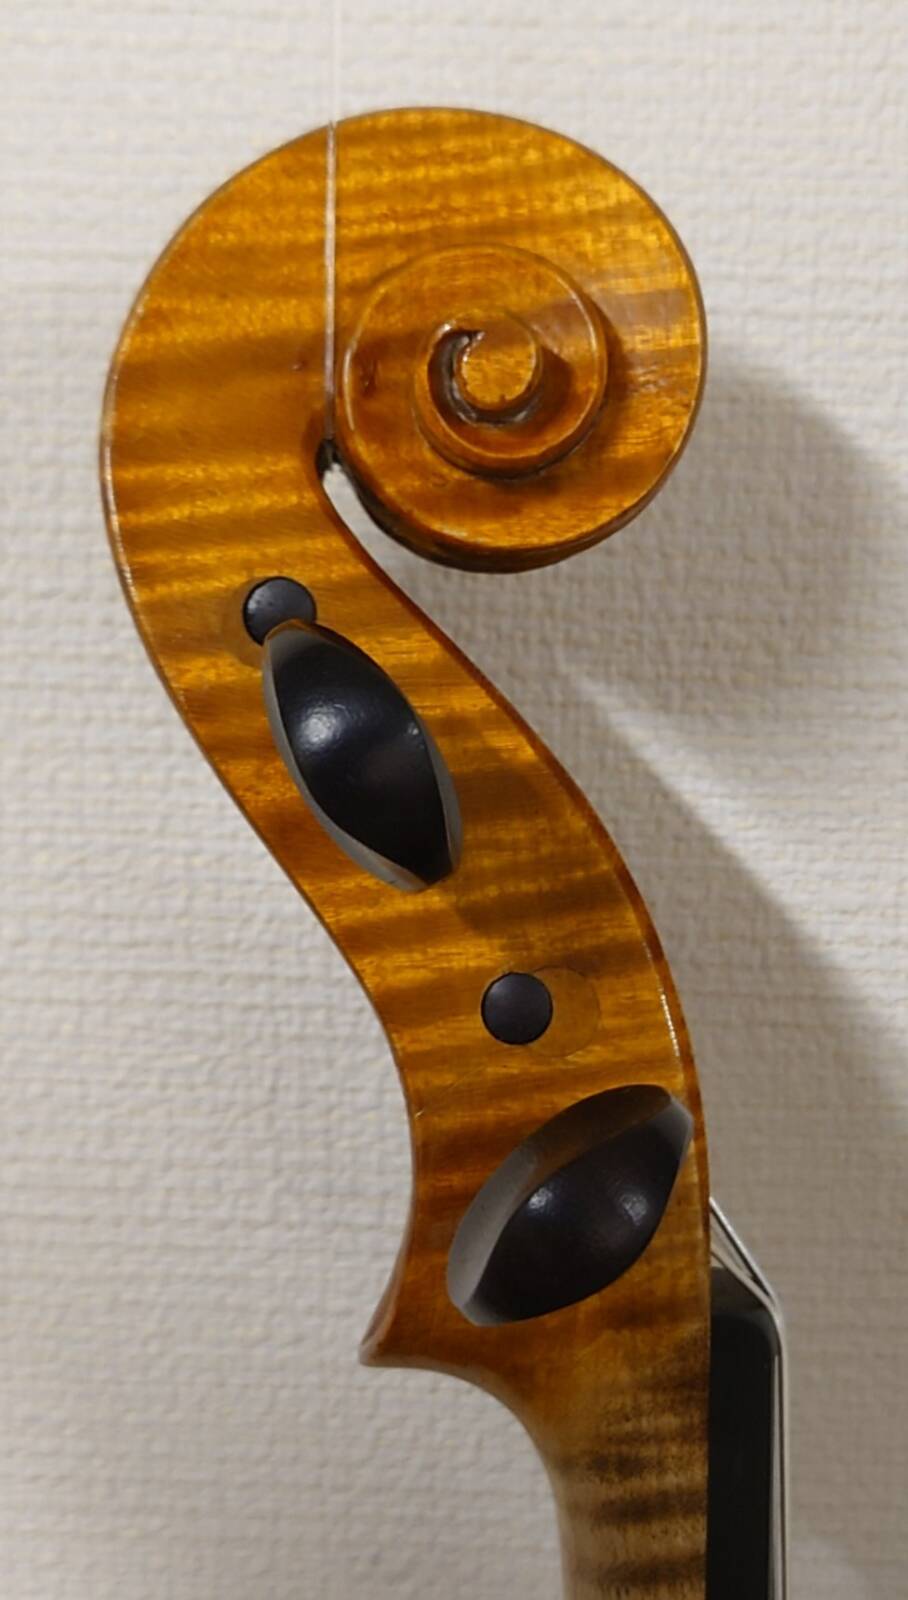 French violin, Henry & Arnaud Grenoble 1911